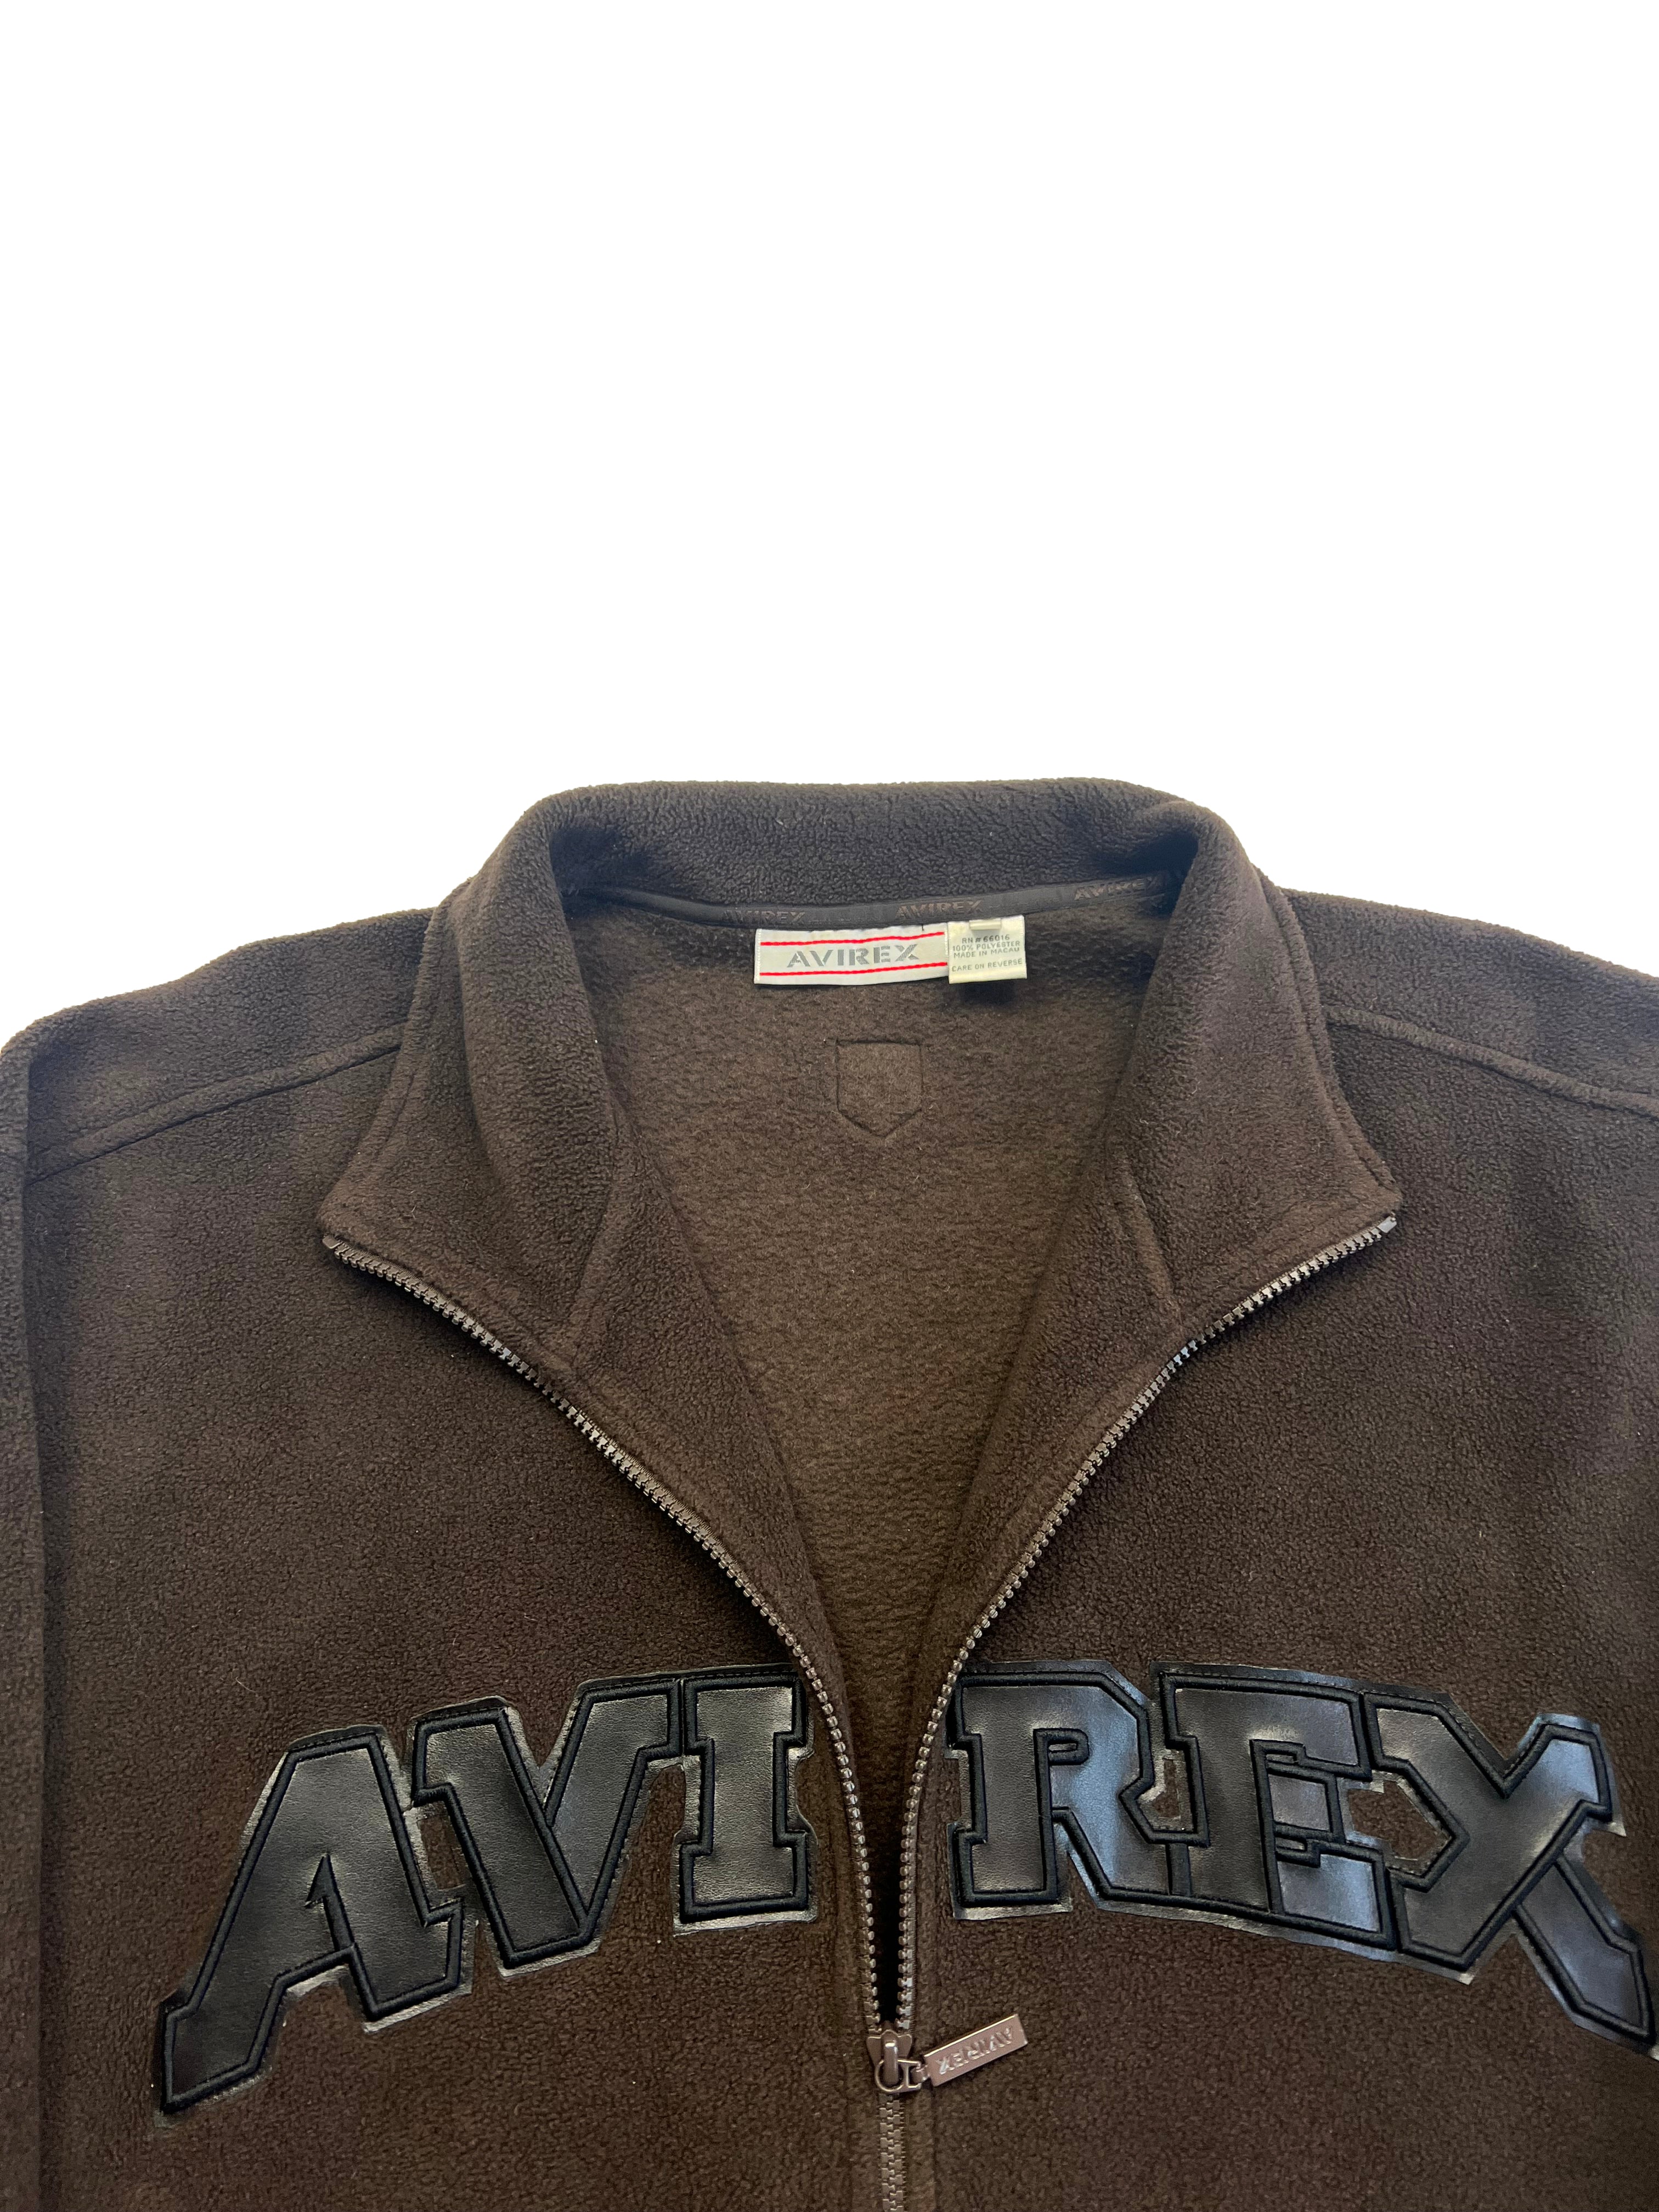 Avirex Brown Fleece 90's